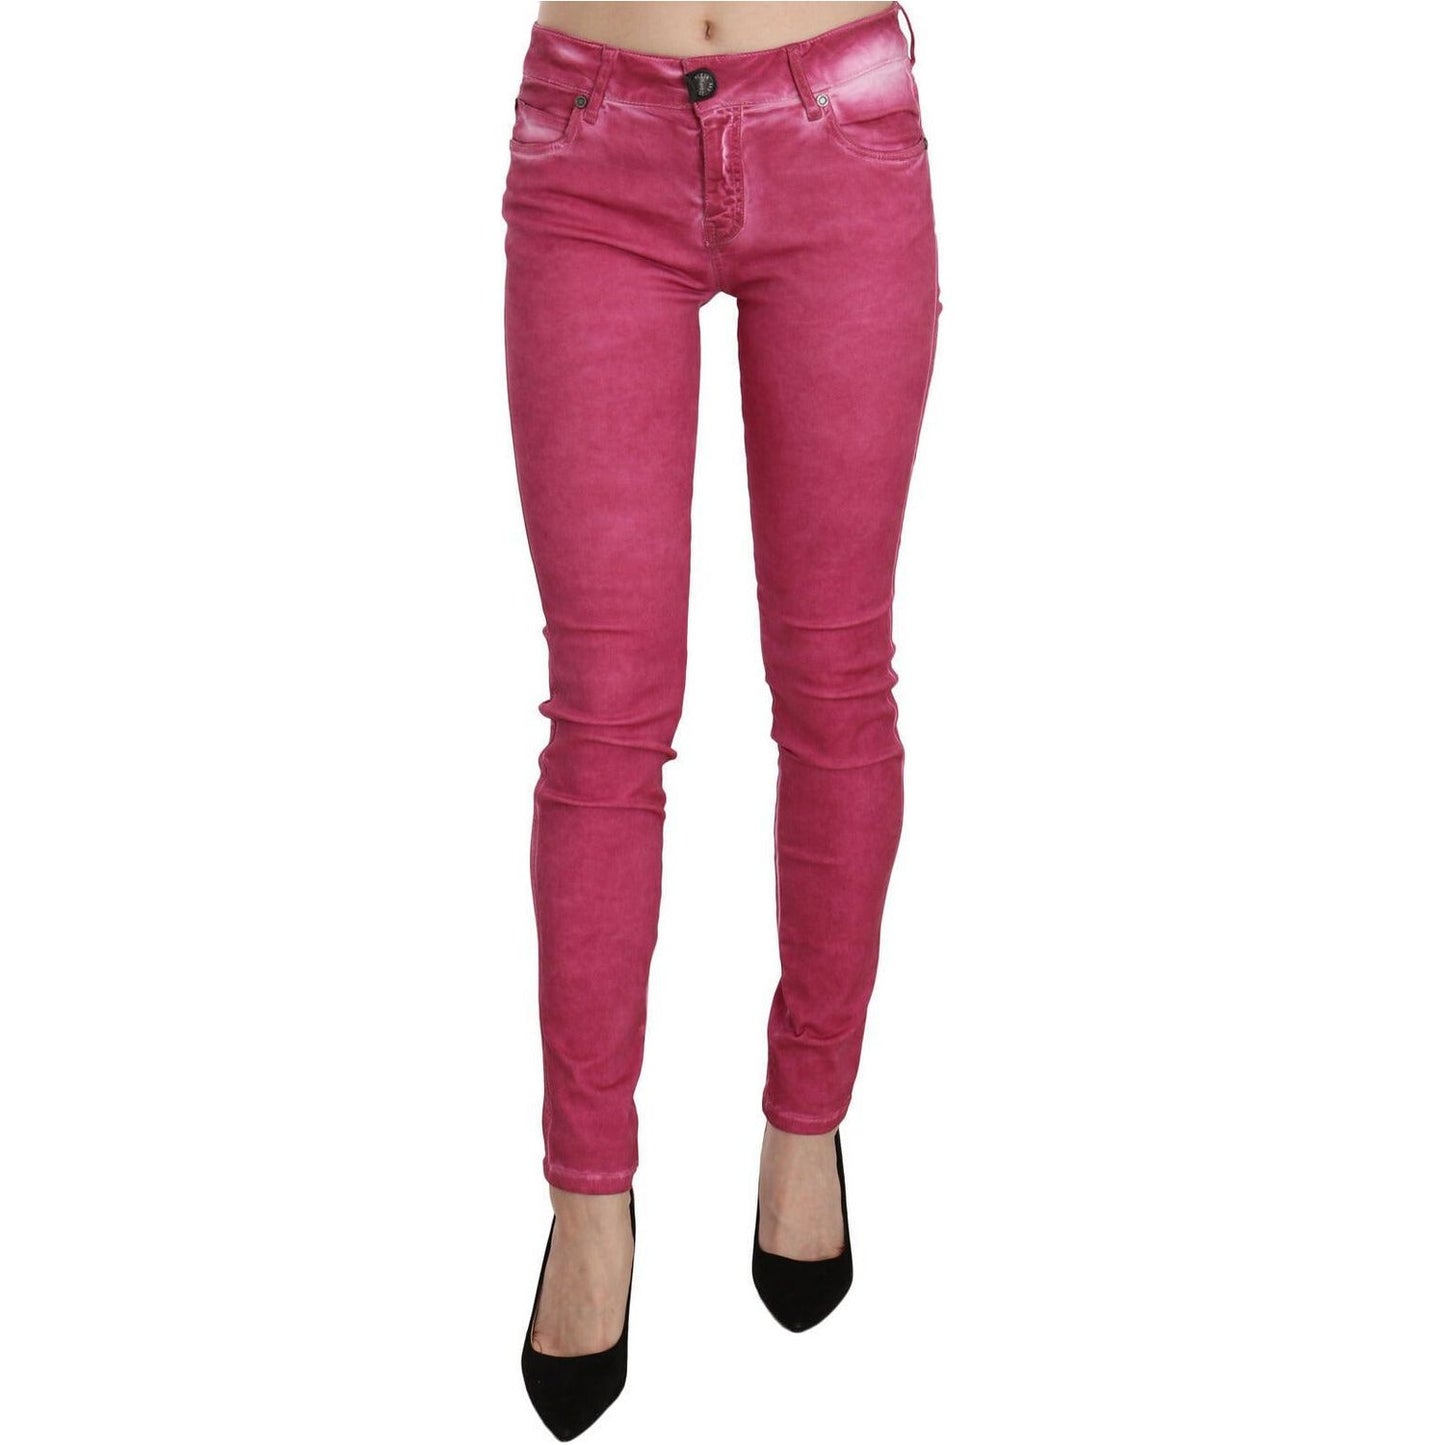 Dolce & Gabbana Chic Pink Mid Waist Skinny Pants Jeans & Pants pink-velvet-mid-waist-skinny-trouser-pants